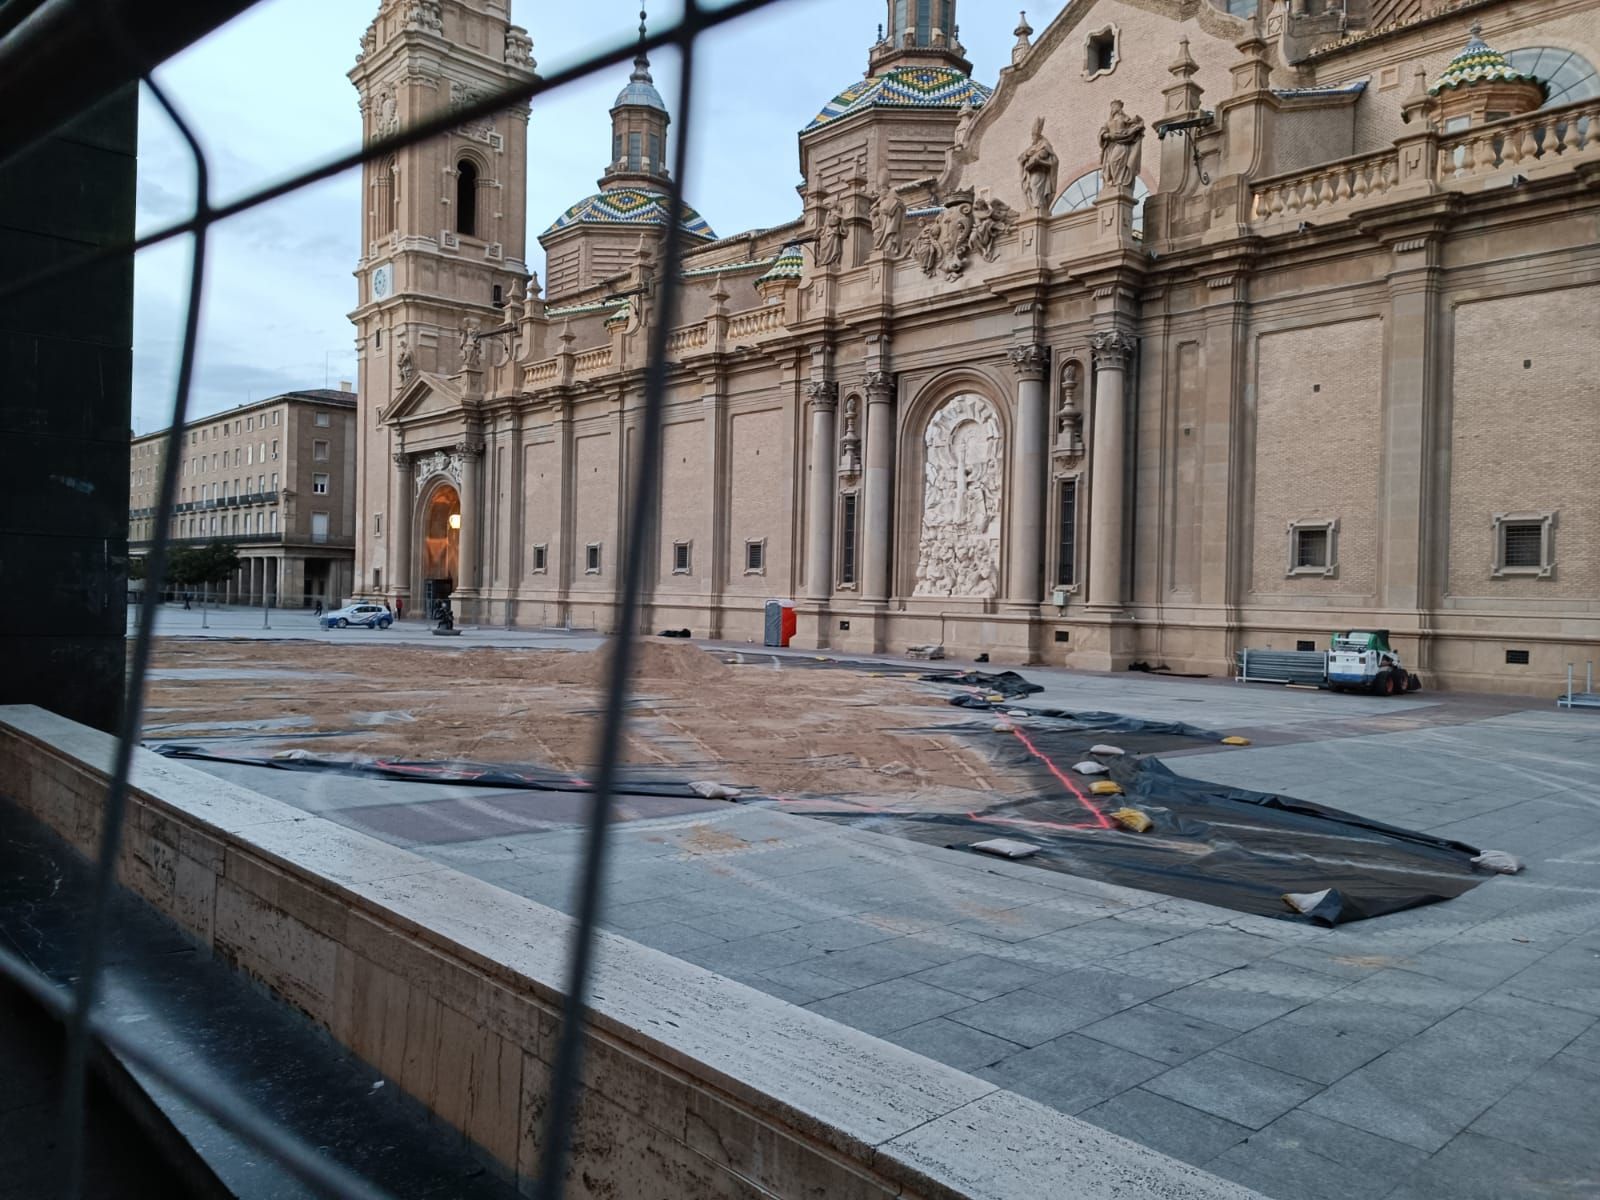 Arranca el montaje del Belén gigante de la plaza del Pilar